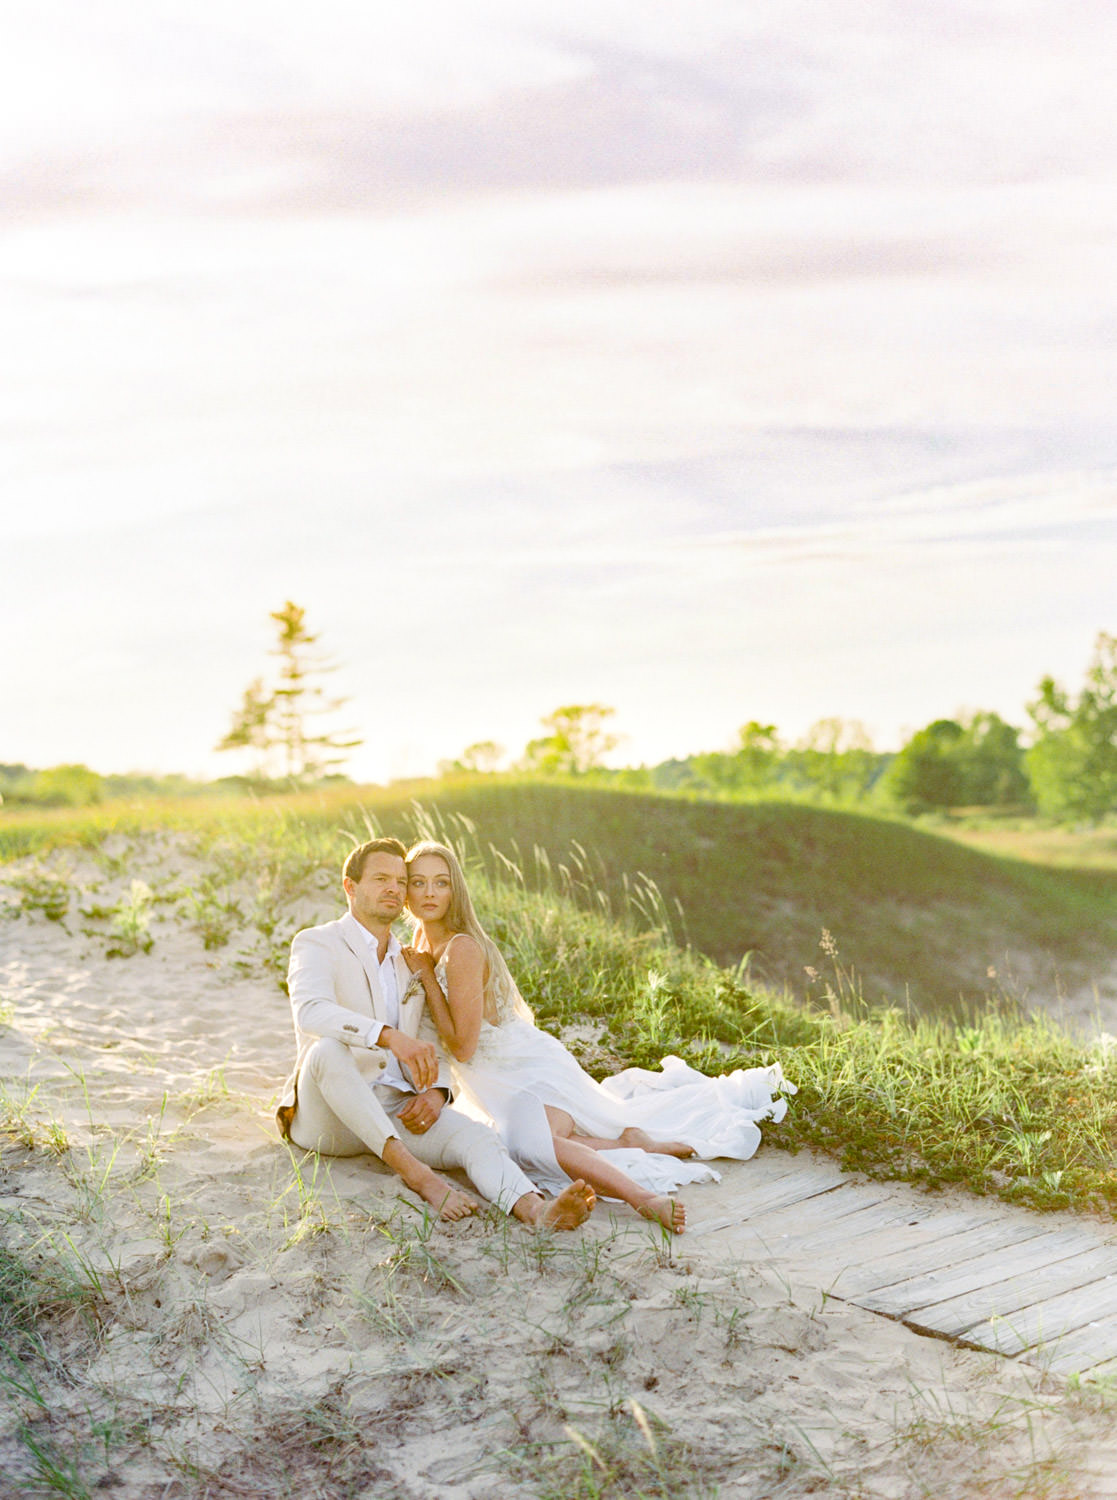 Kohler-Andrae State Park engagement and wedding photos